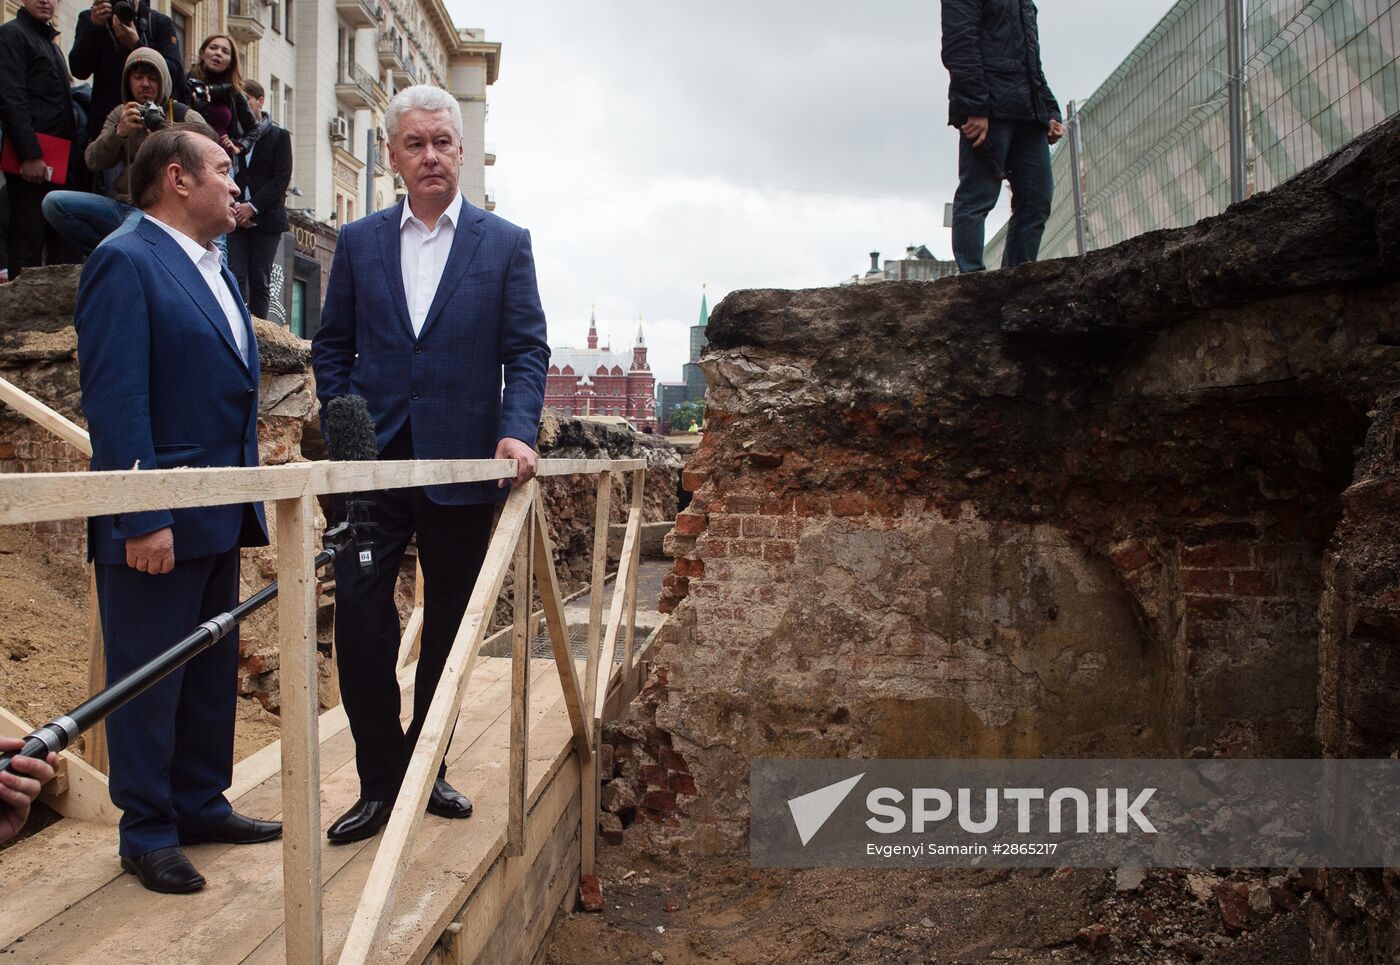 Moscow Mayor Sergei Sobyanin inspects the progress of improvement works on Tverskaya Street